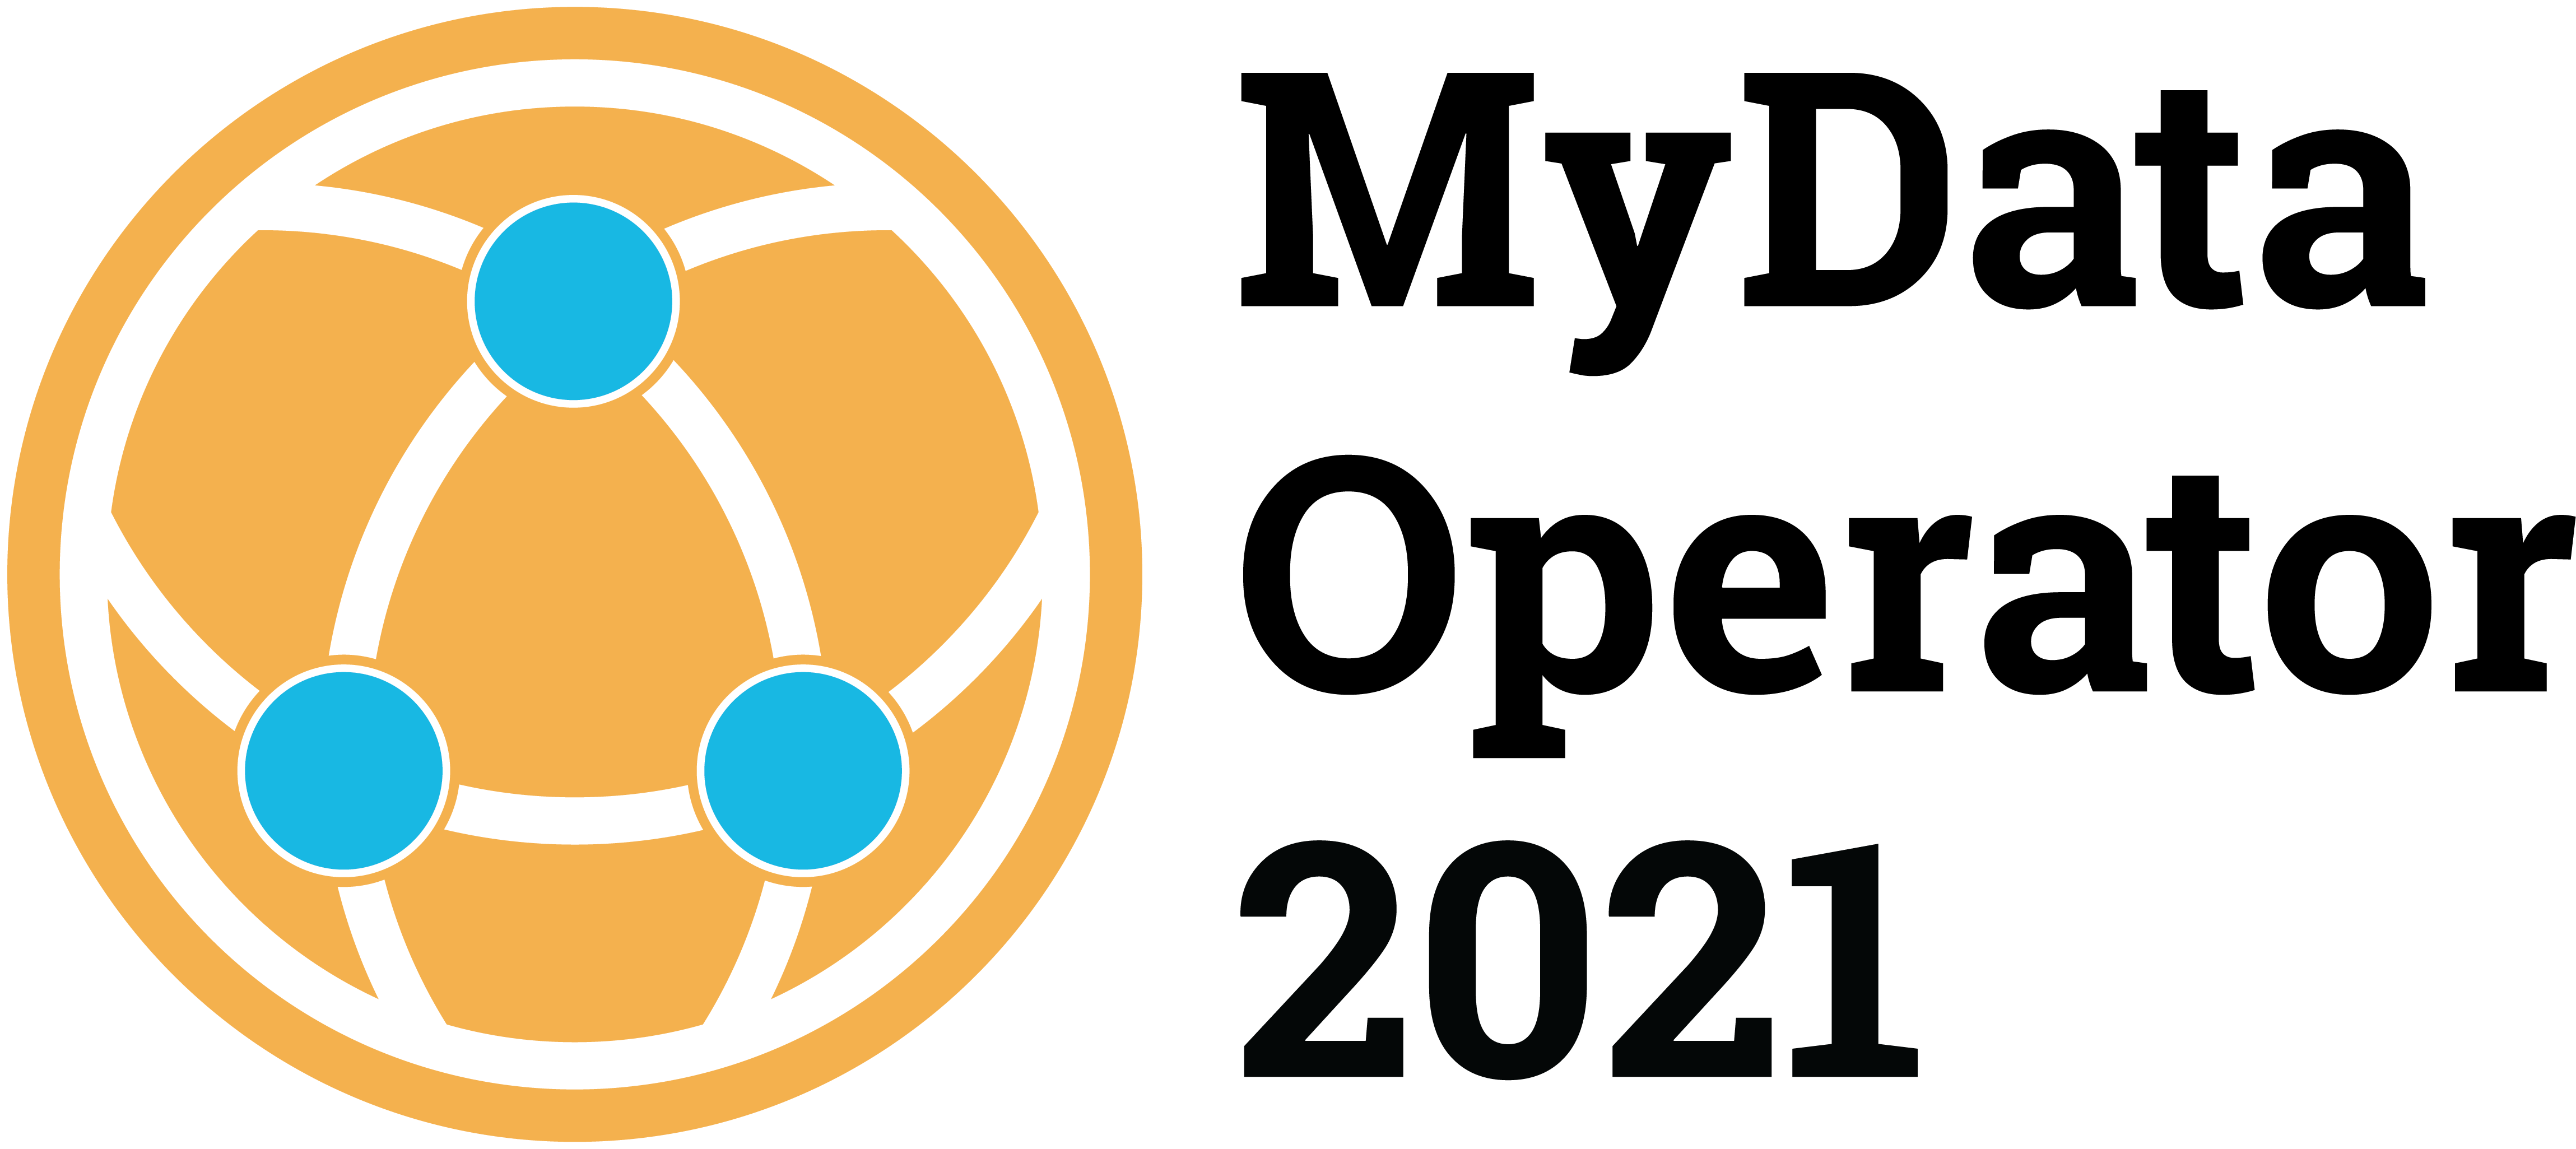 MyData Operator Award 2021